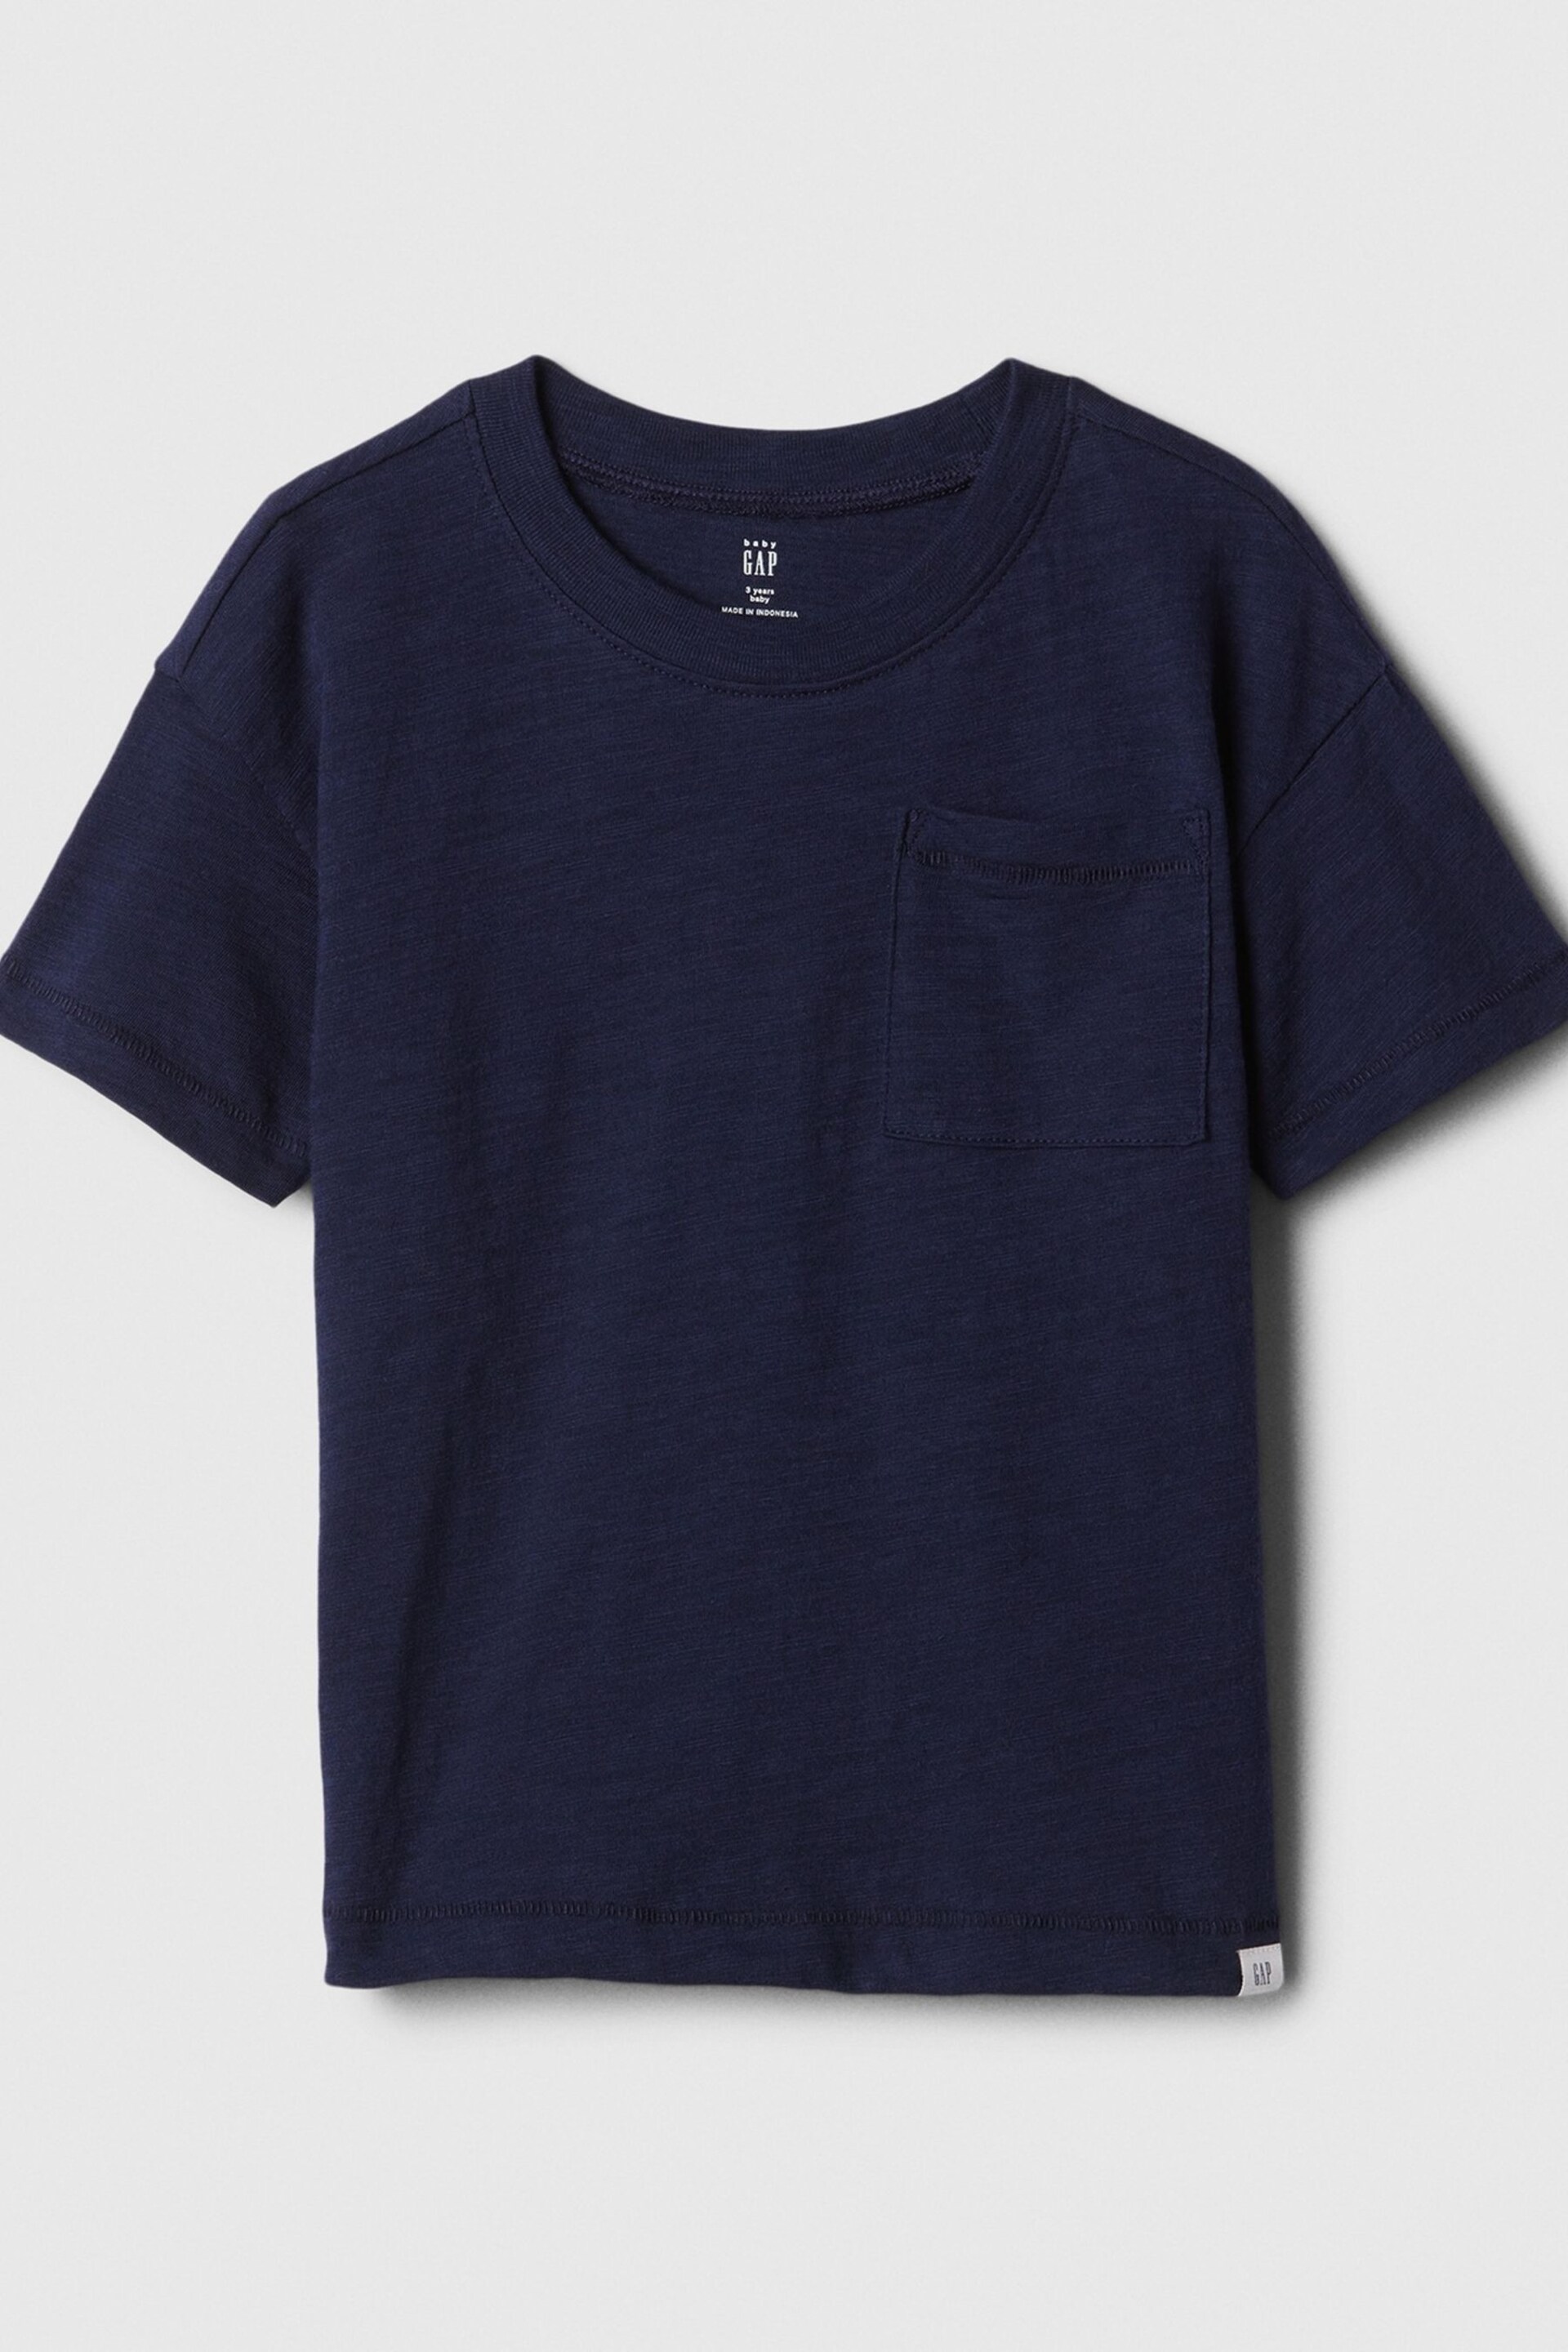 Gap Navy Blue Marl Pocket Crew Neck Short Sleeve T-Shirt (Newborn-5yrs) - Image 1 of 1